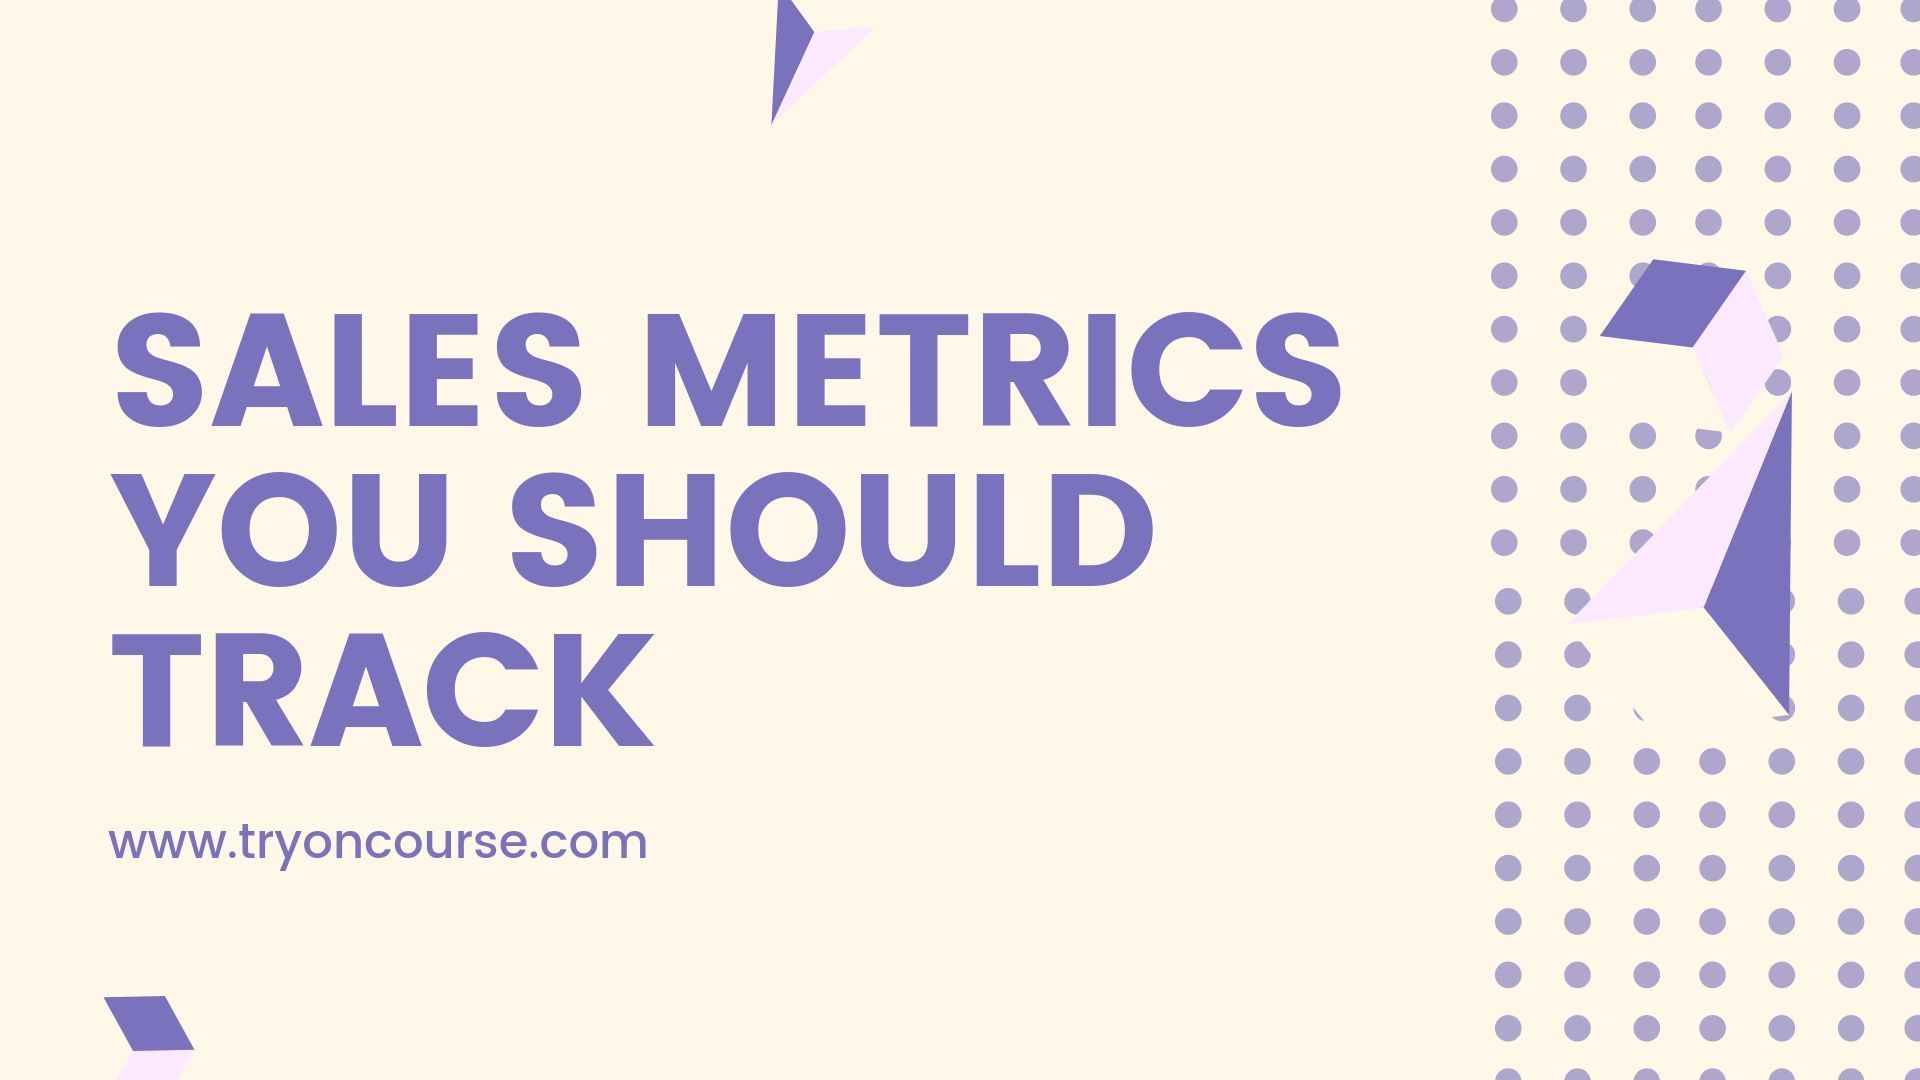 Sales metrics you should track